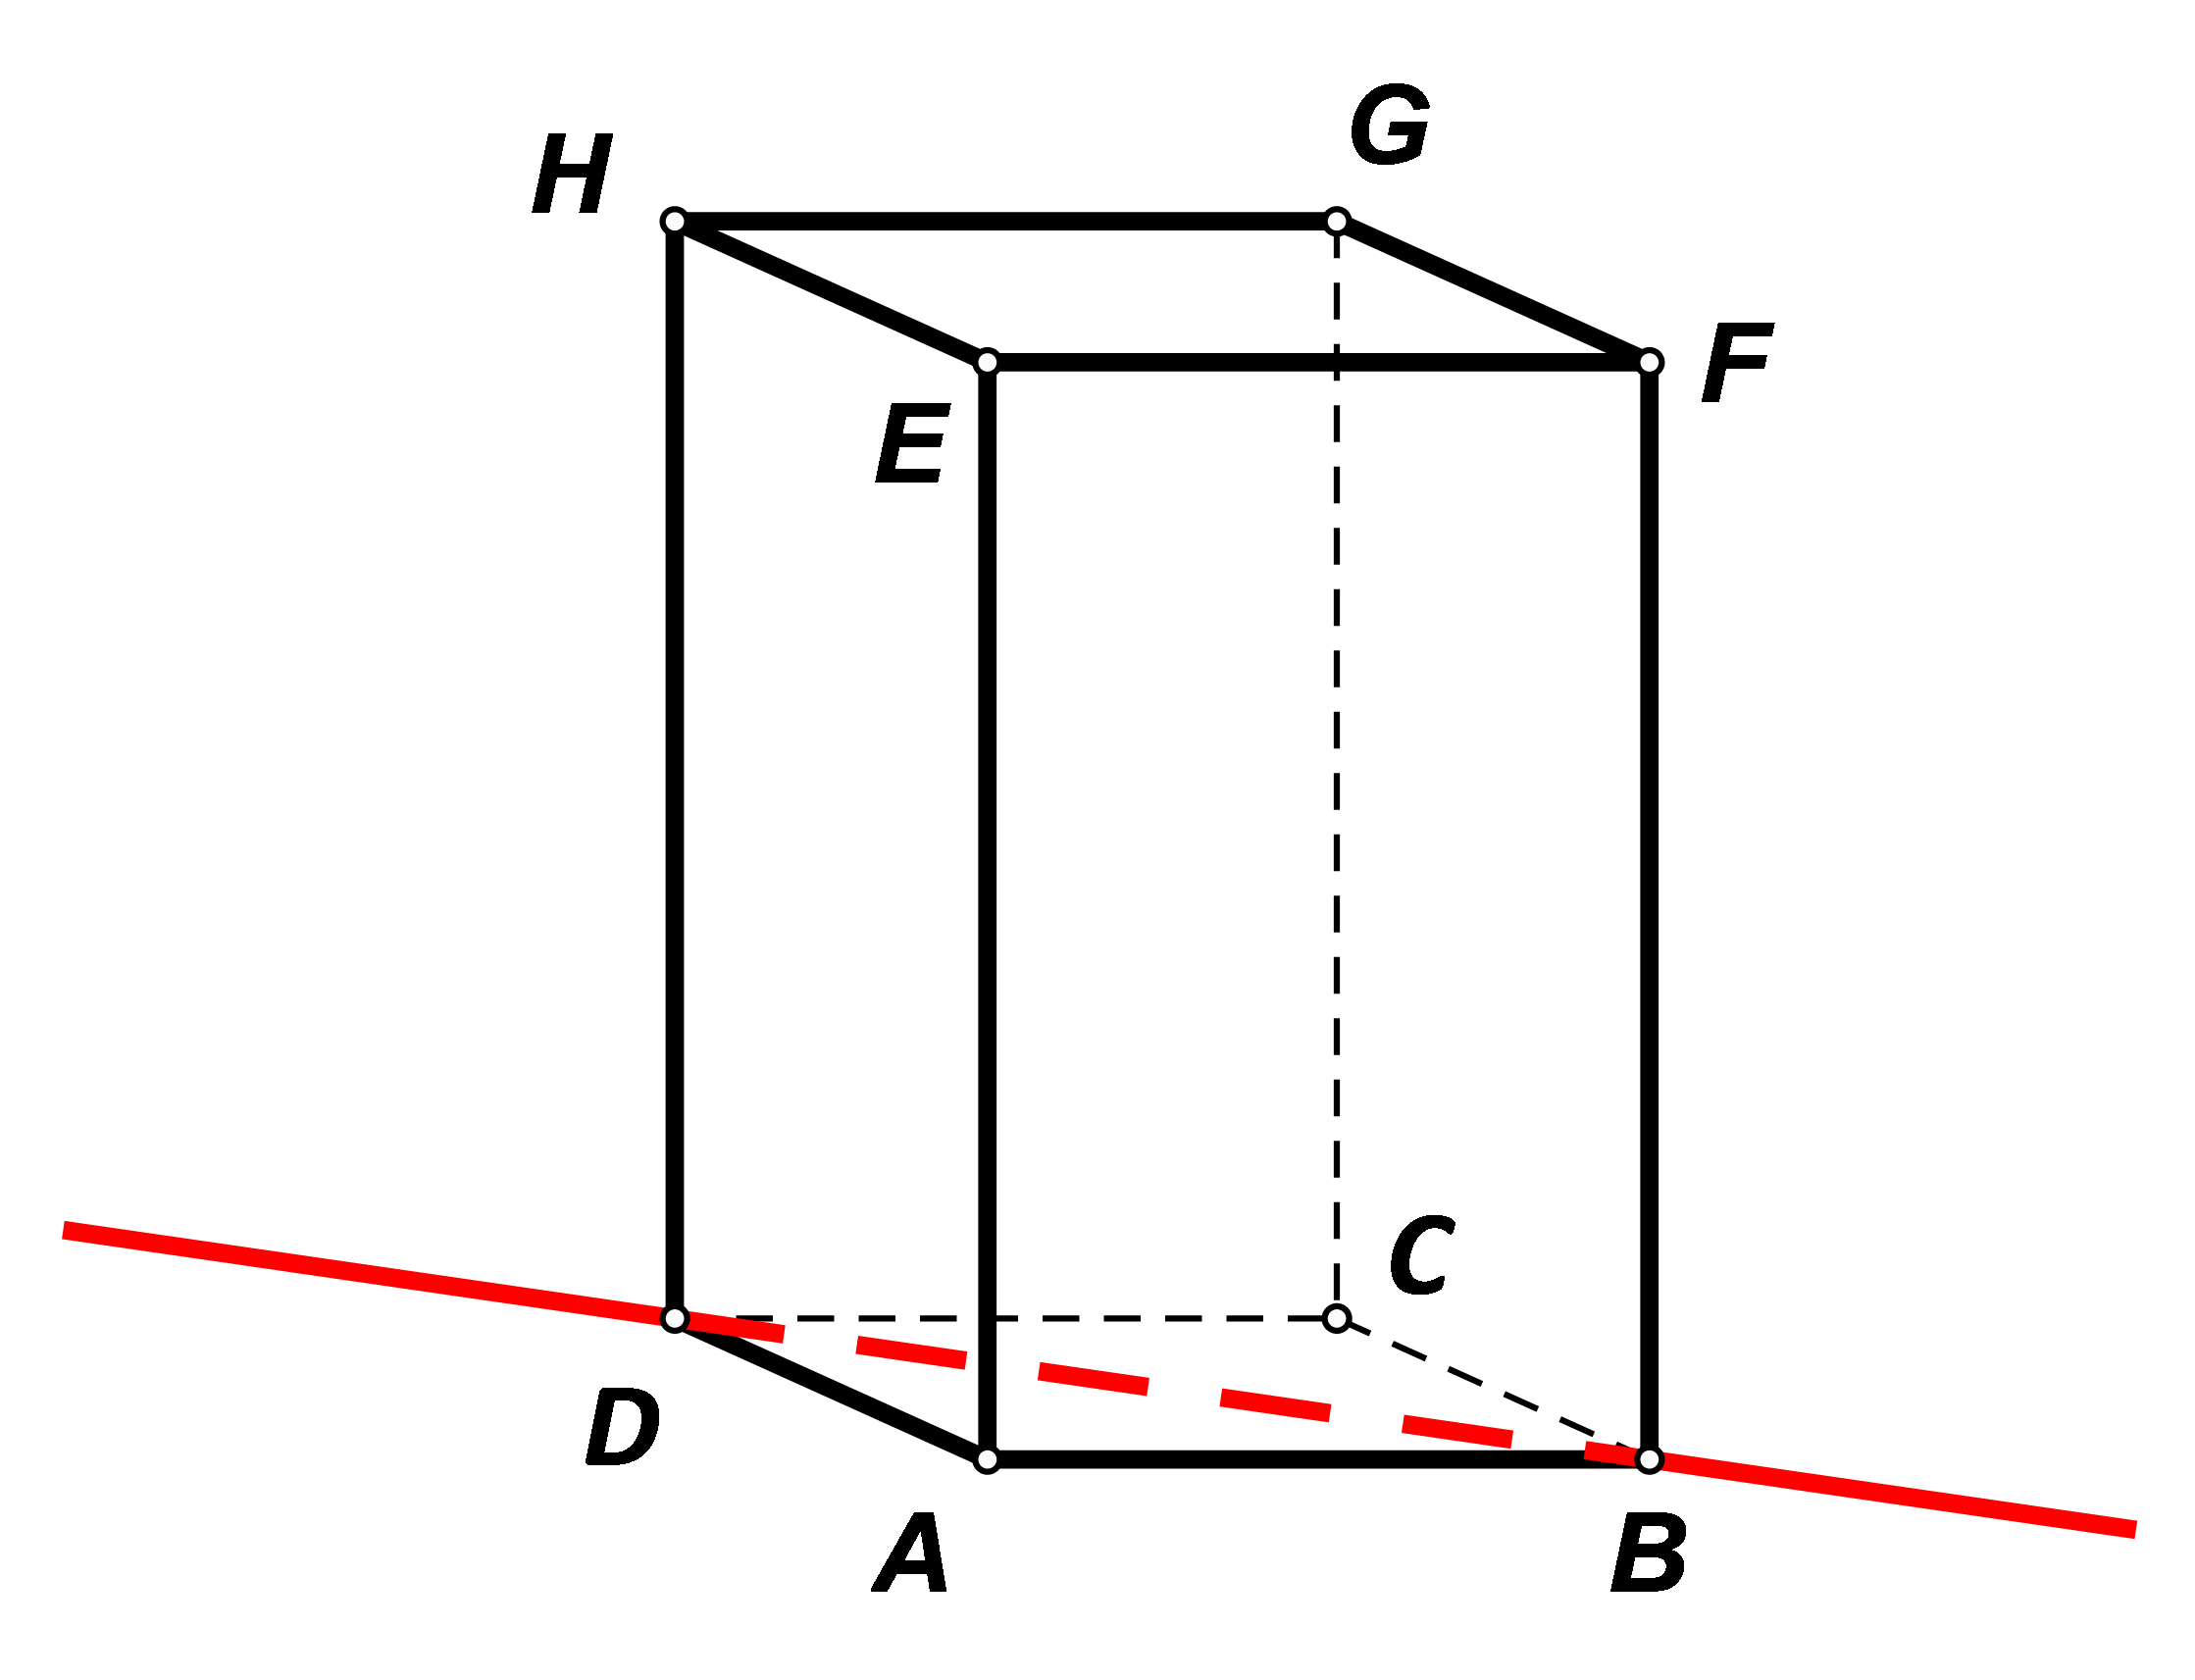 Slika prikazuje kvadar ABCDEFGH i pravac BD.